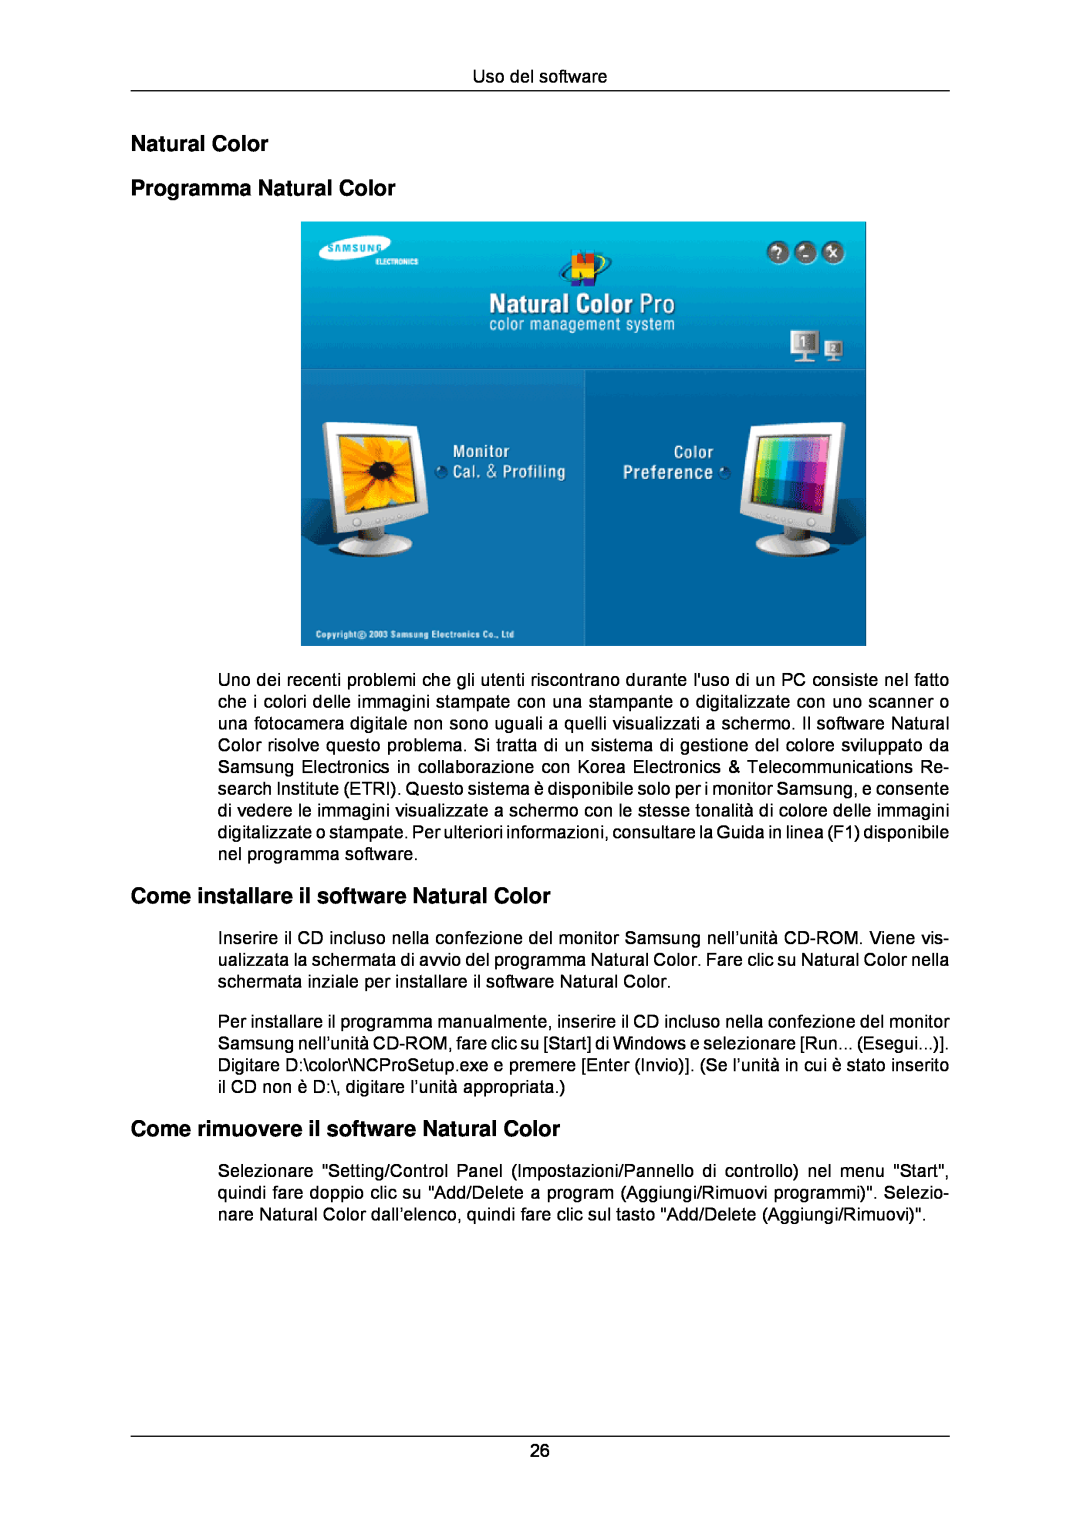 Samsung LS24CMKKFV/EN manual Natural Color Programma Natural Color, Come installare il software Natural Color 